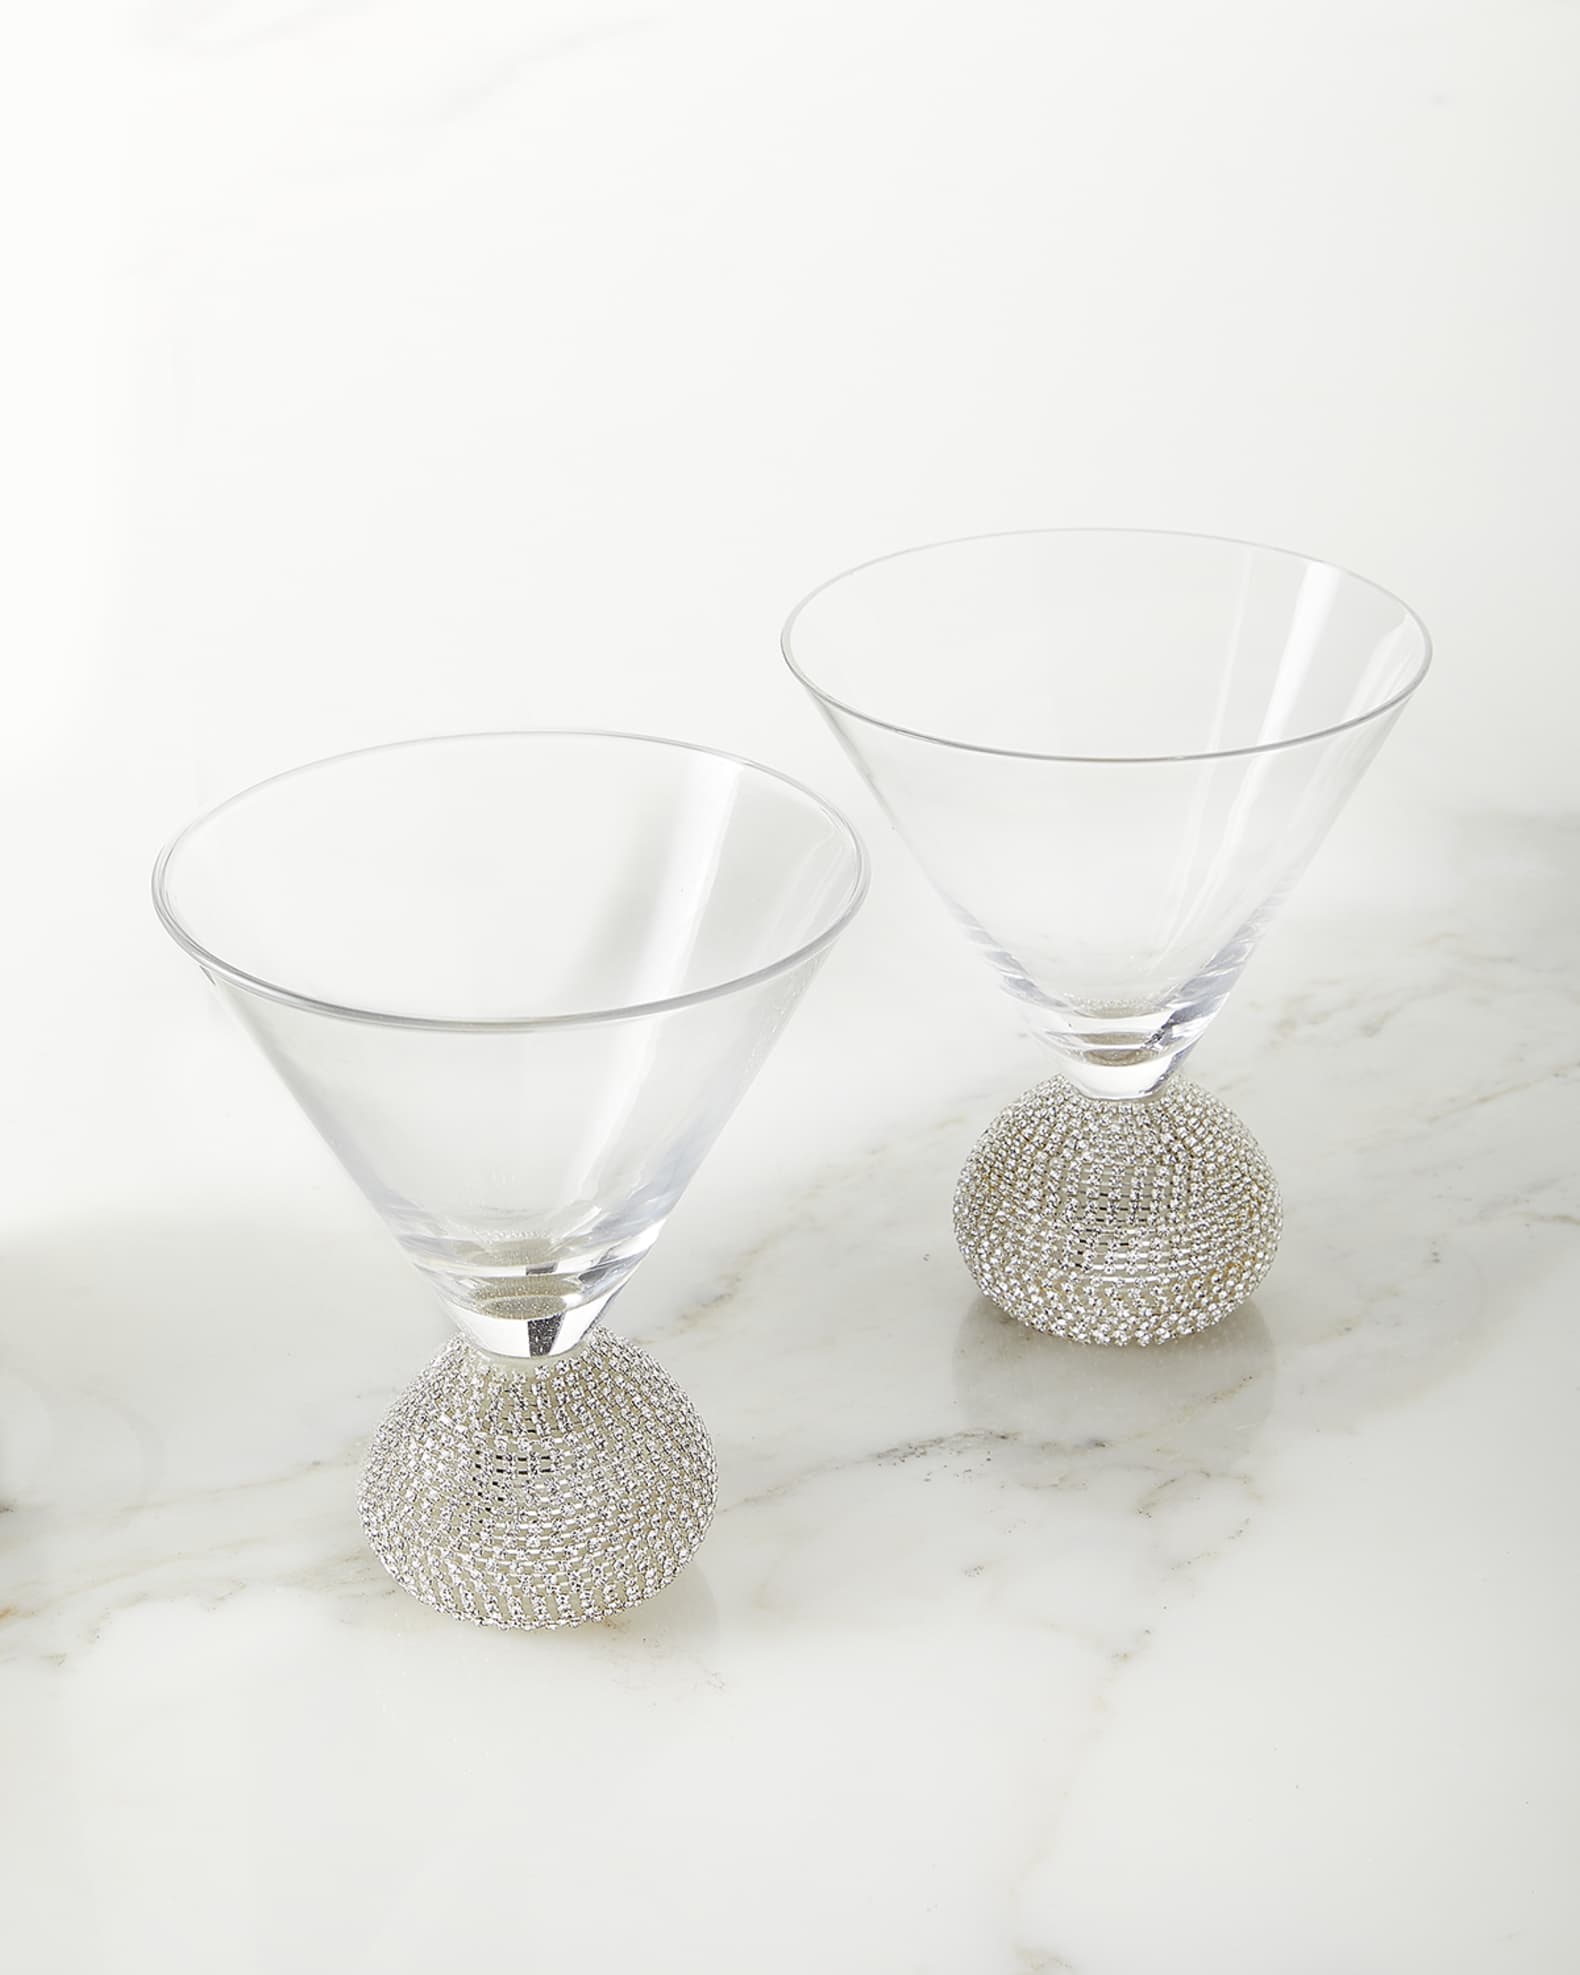 Neiman Marcus Silver Bling Martini Glasses, Set of 2